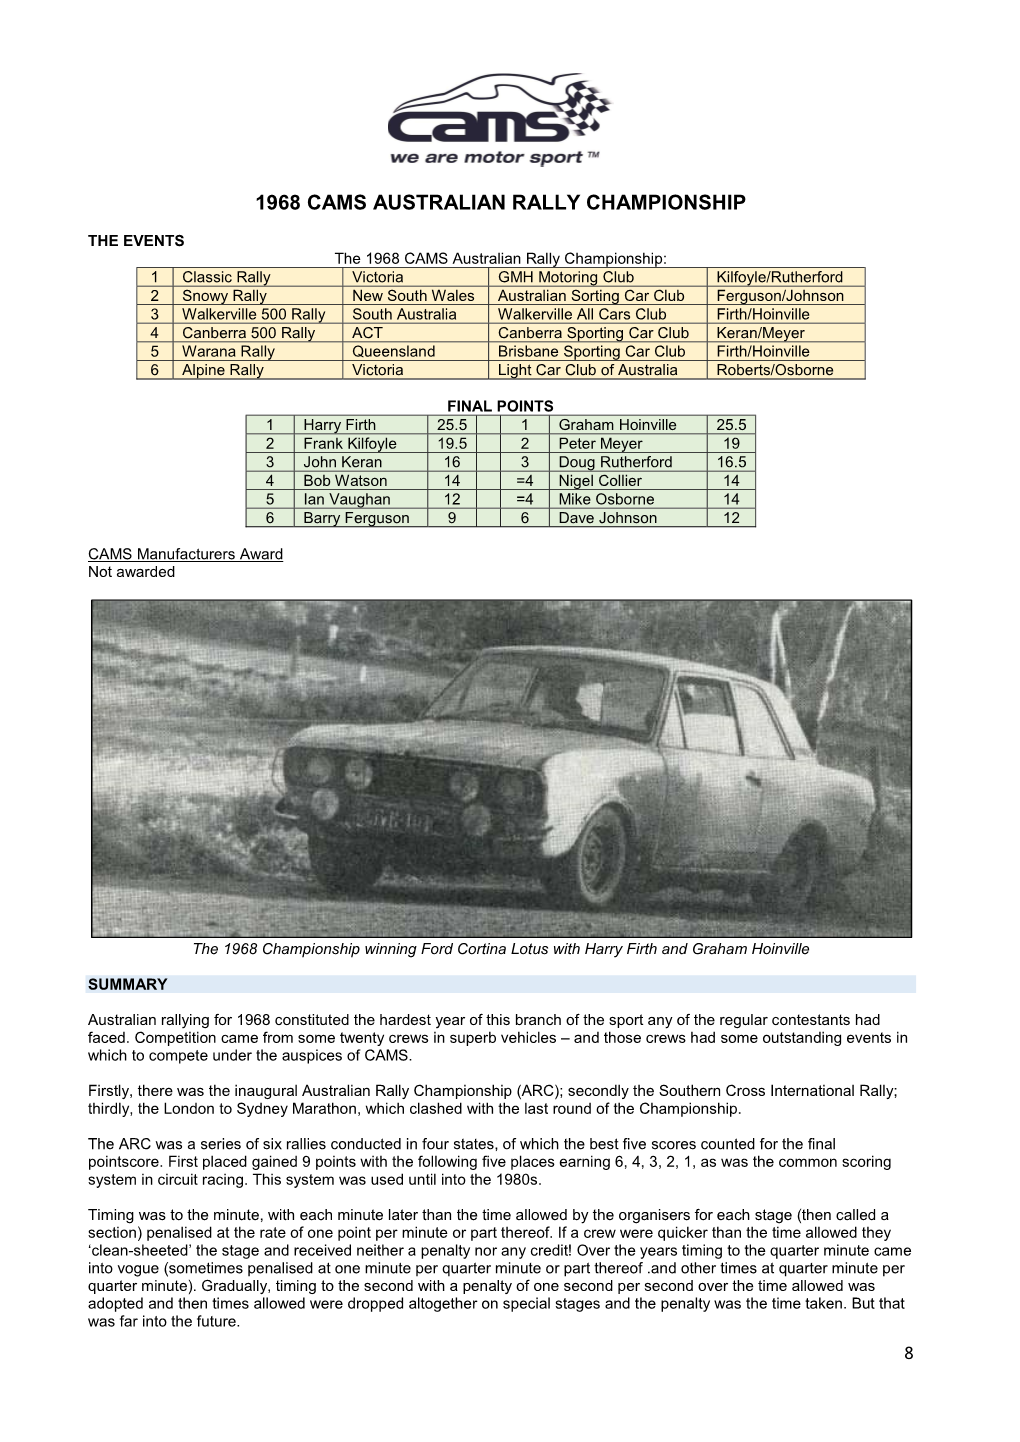 1968 Cams Australian Rally Championship